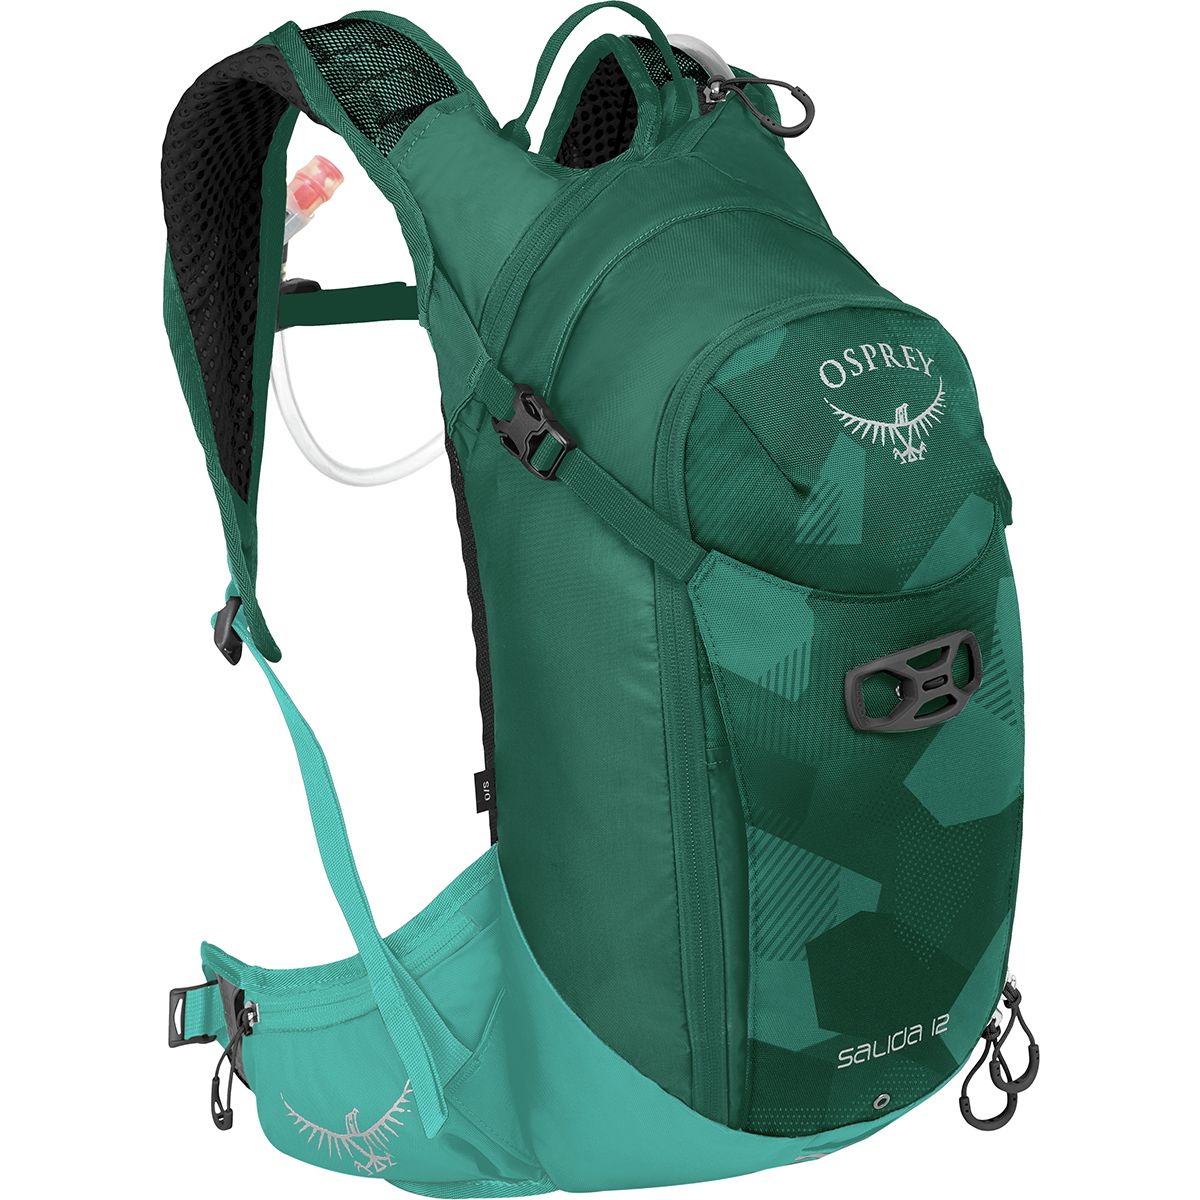 Osprey Packs Salida 12L Backpack - Women's Teal Glass, One Size